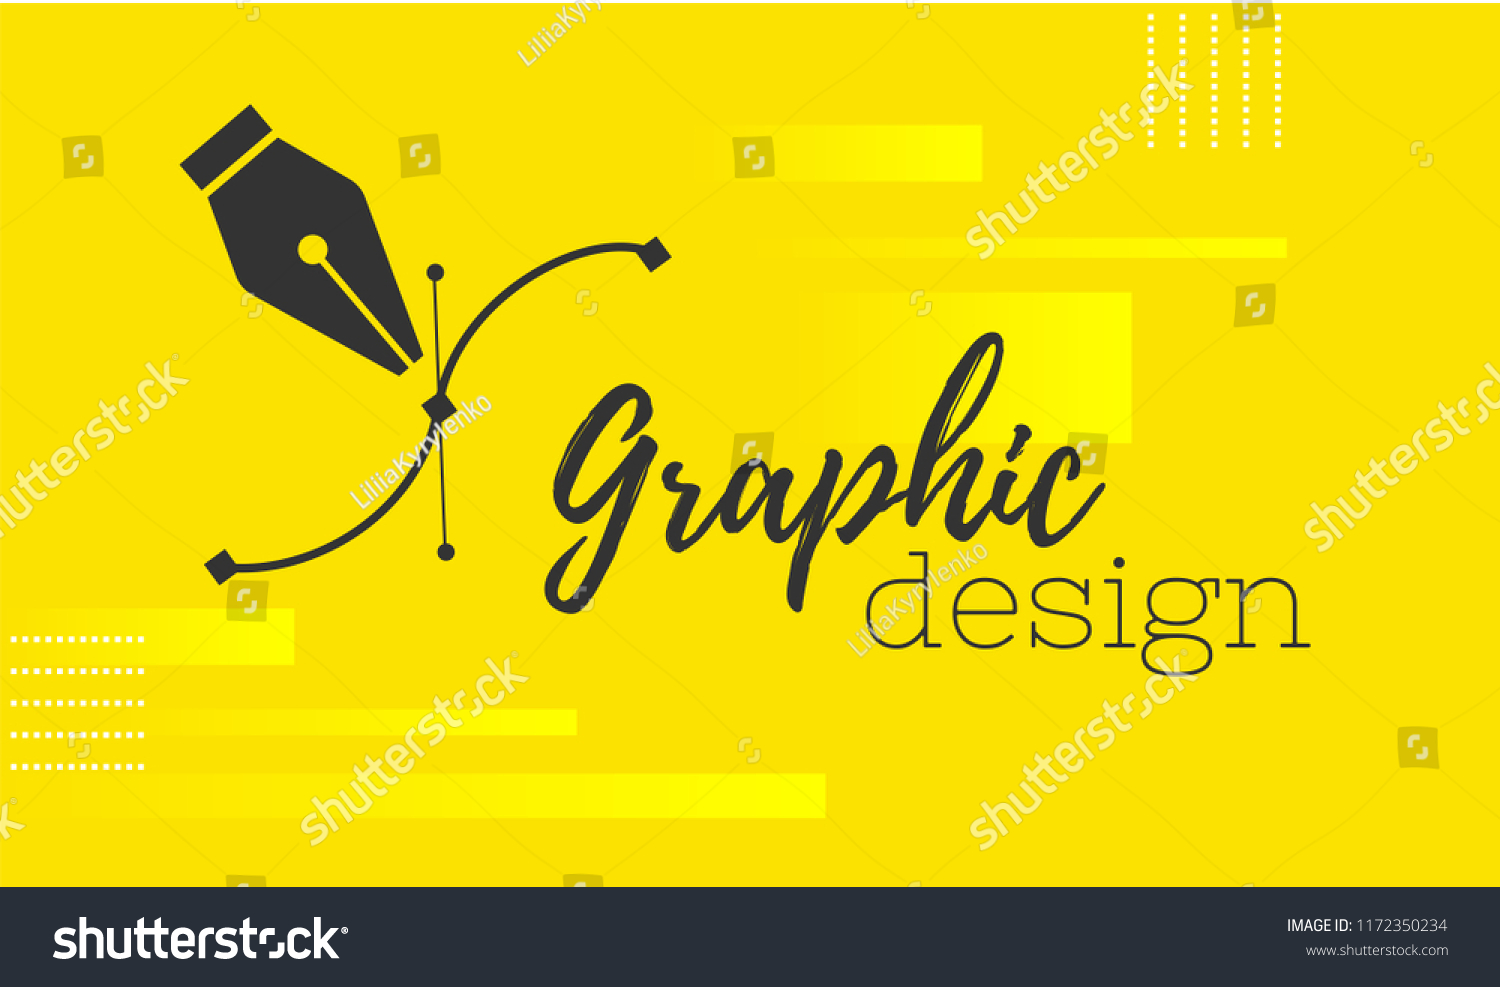 SVG of Graphic design. Pen tool cursor. Vector computer graphics. banner for designer or illustrator. The curve control points. svg